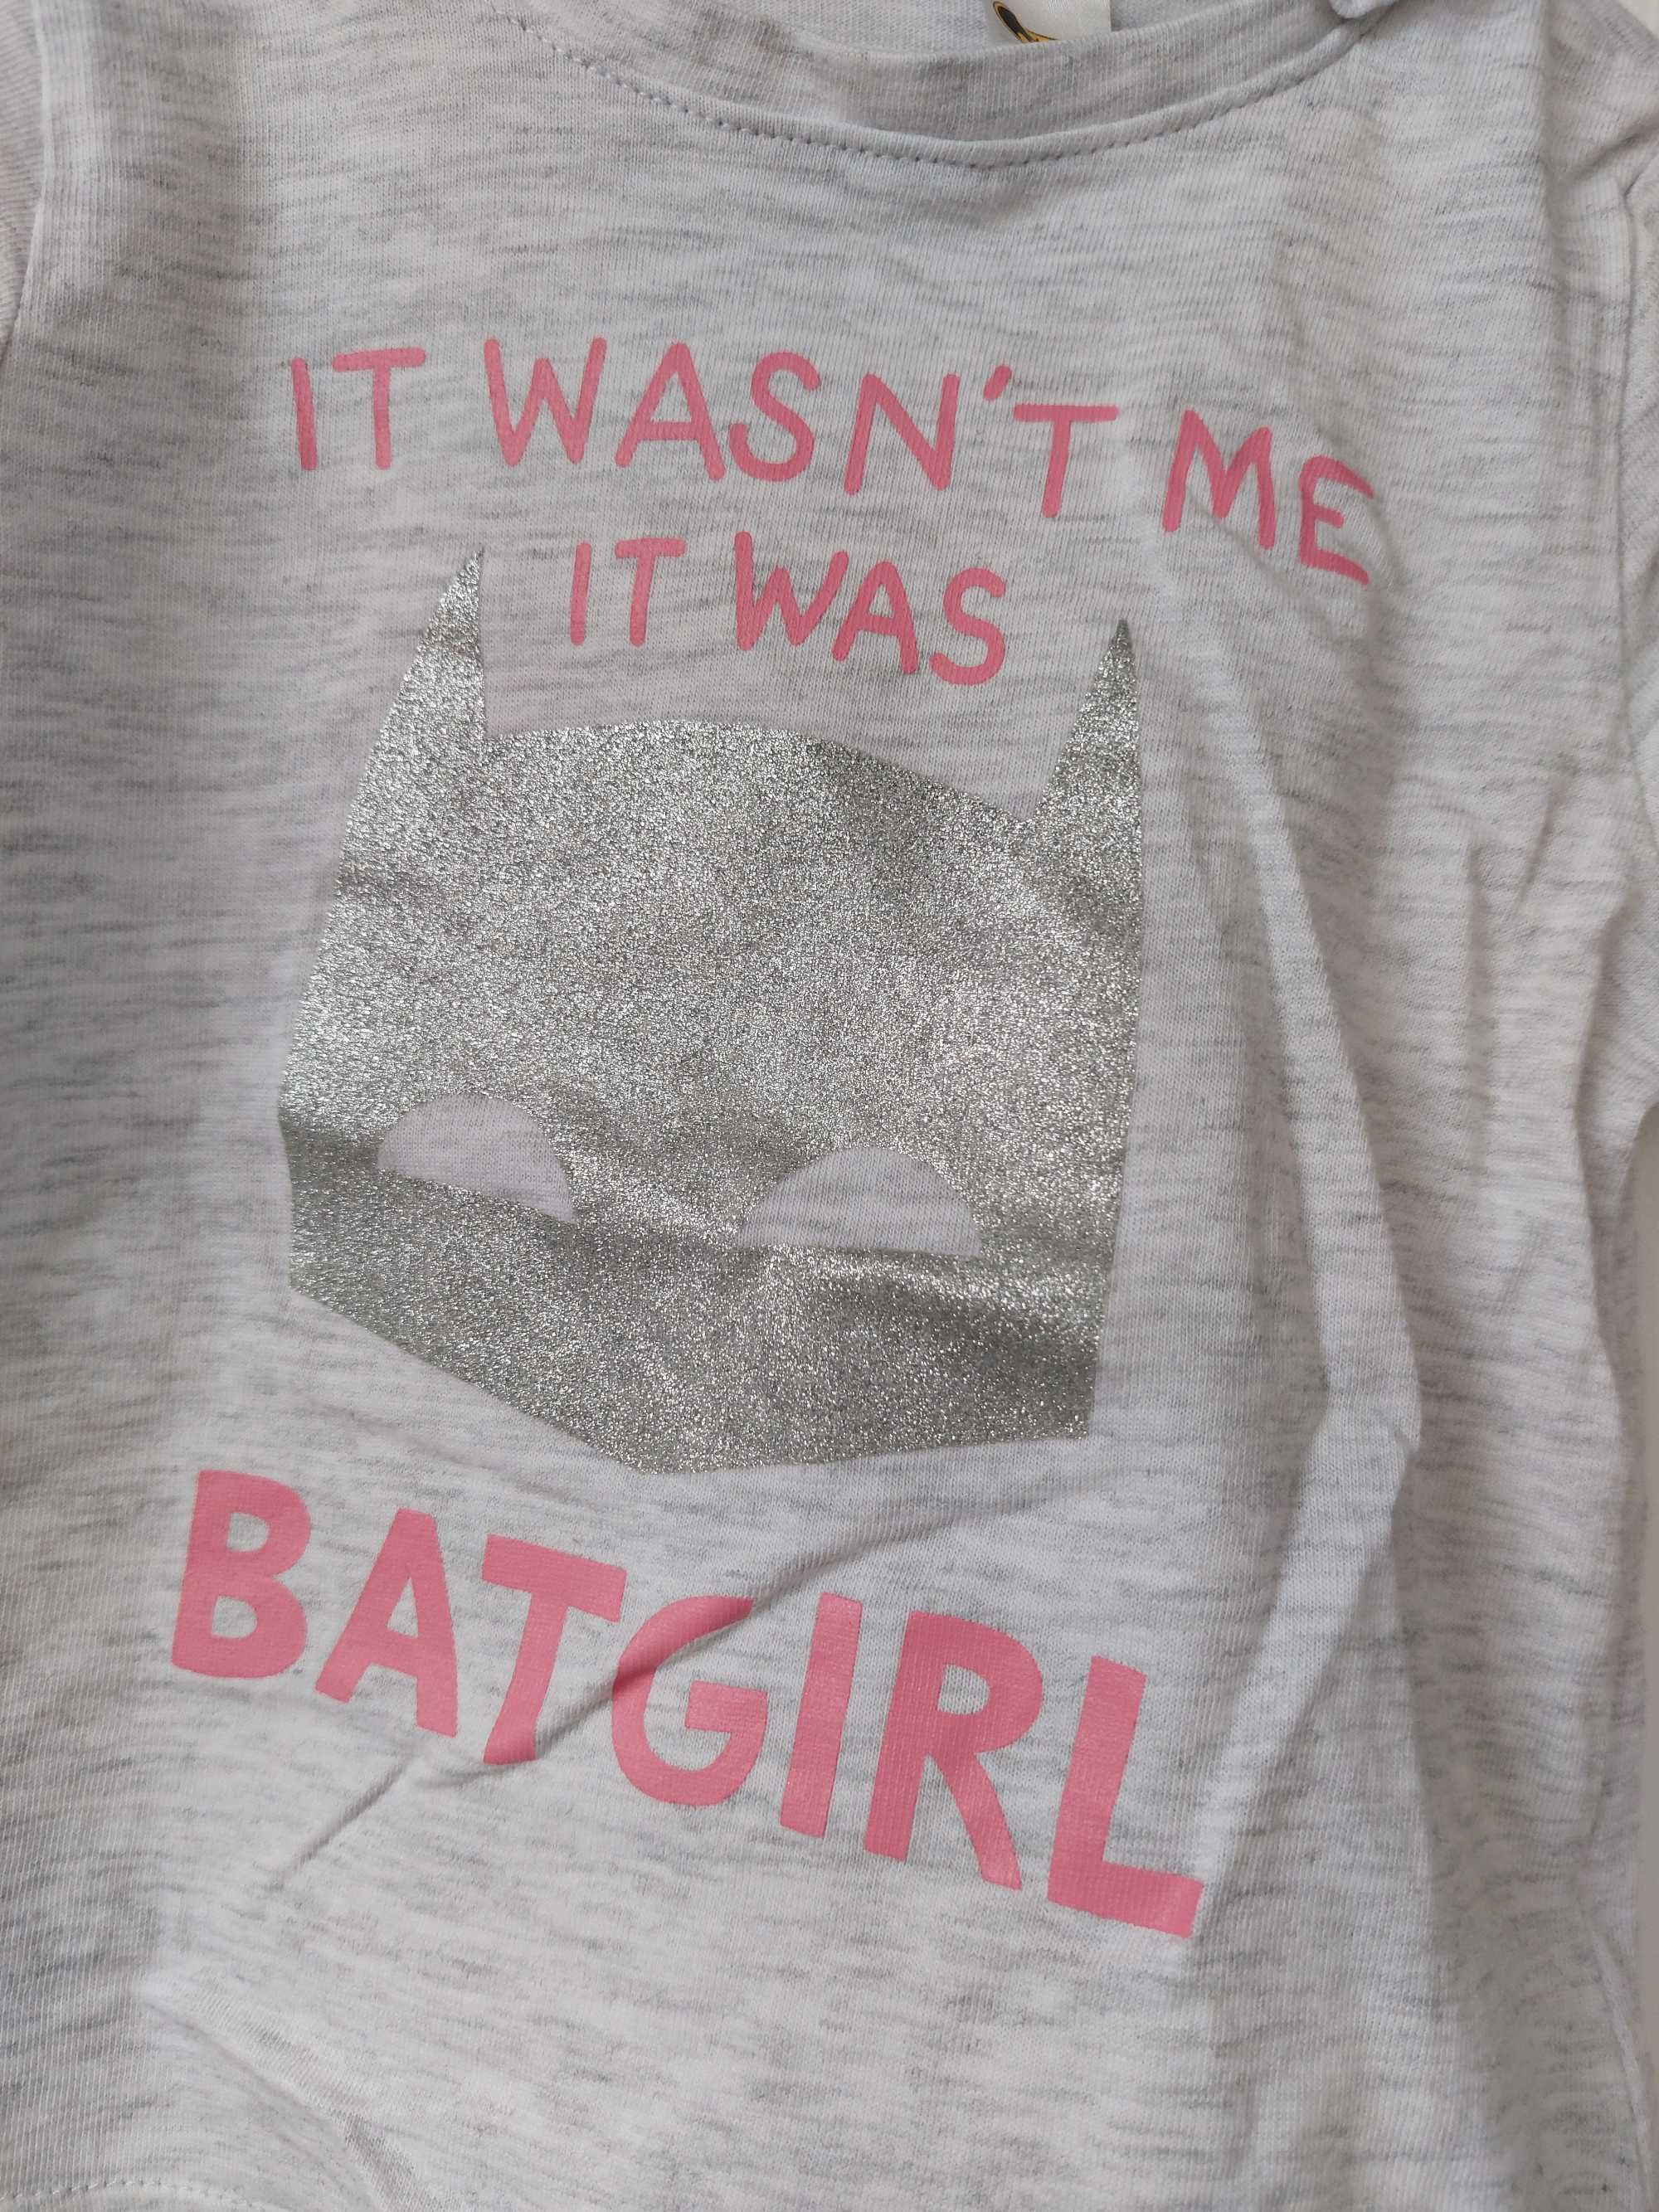 H&M śliczny komplet Batgirl szara bluzeczka plus legginsy r. 68